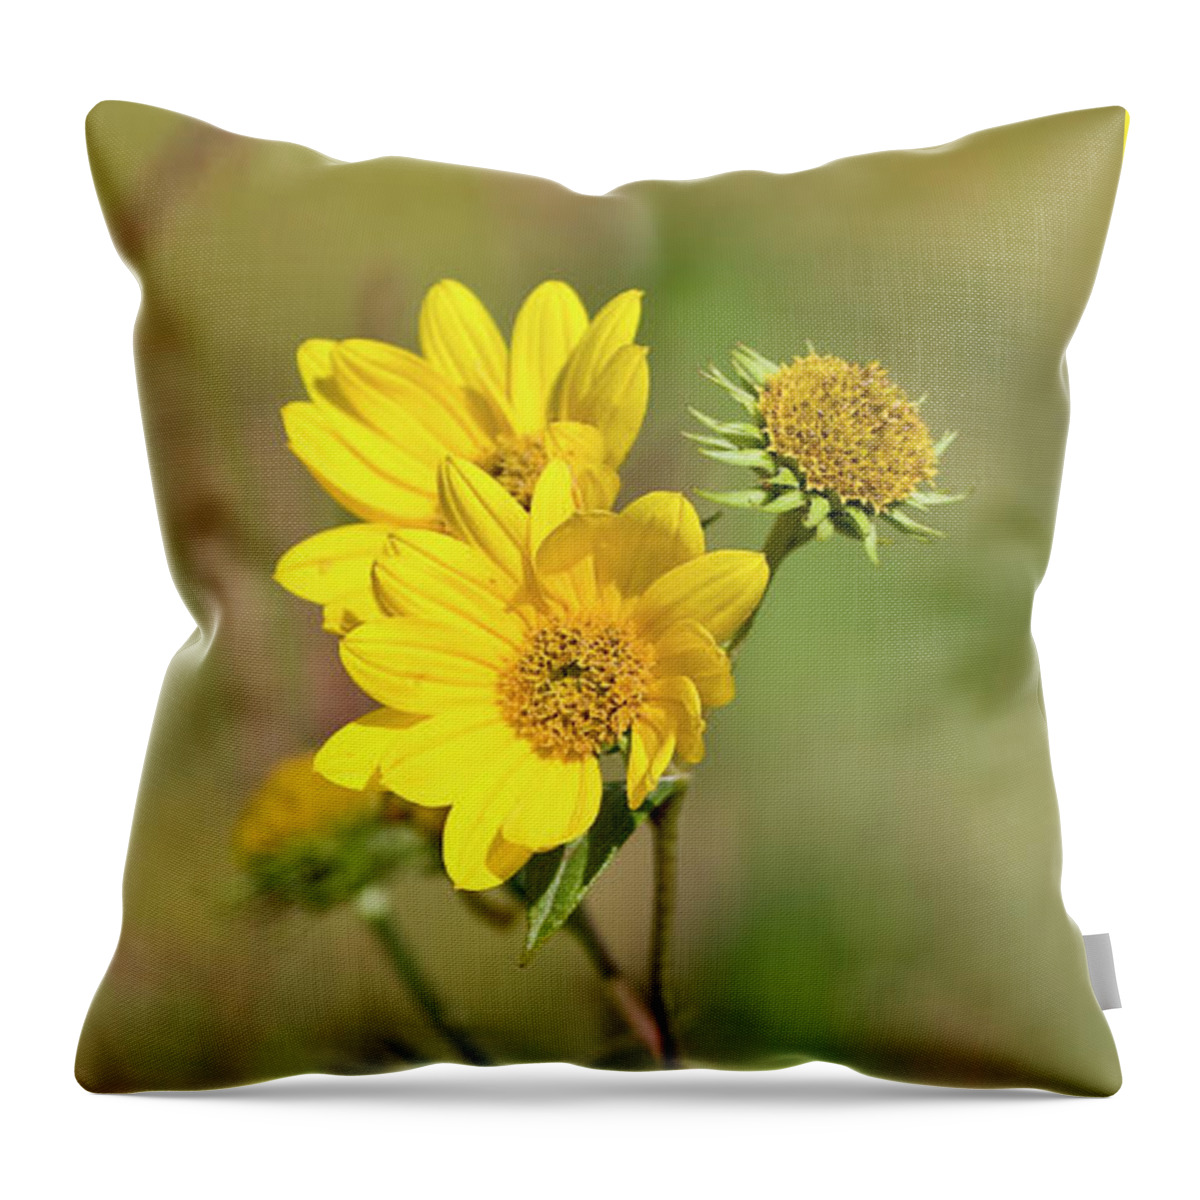 Flower Throw Pillow featuring the photograph Maximilian Sunflowers - UW Arboretum by Steven Ralser